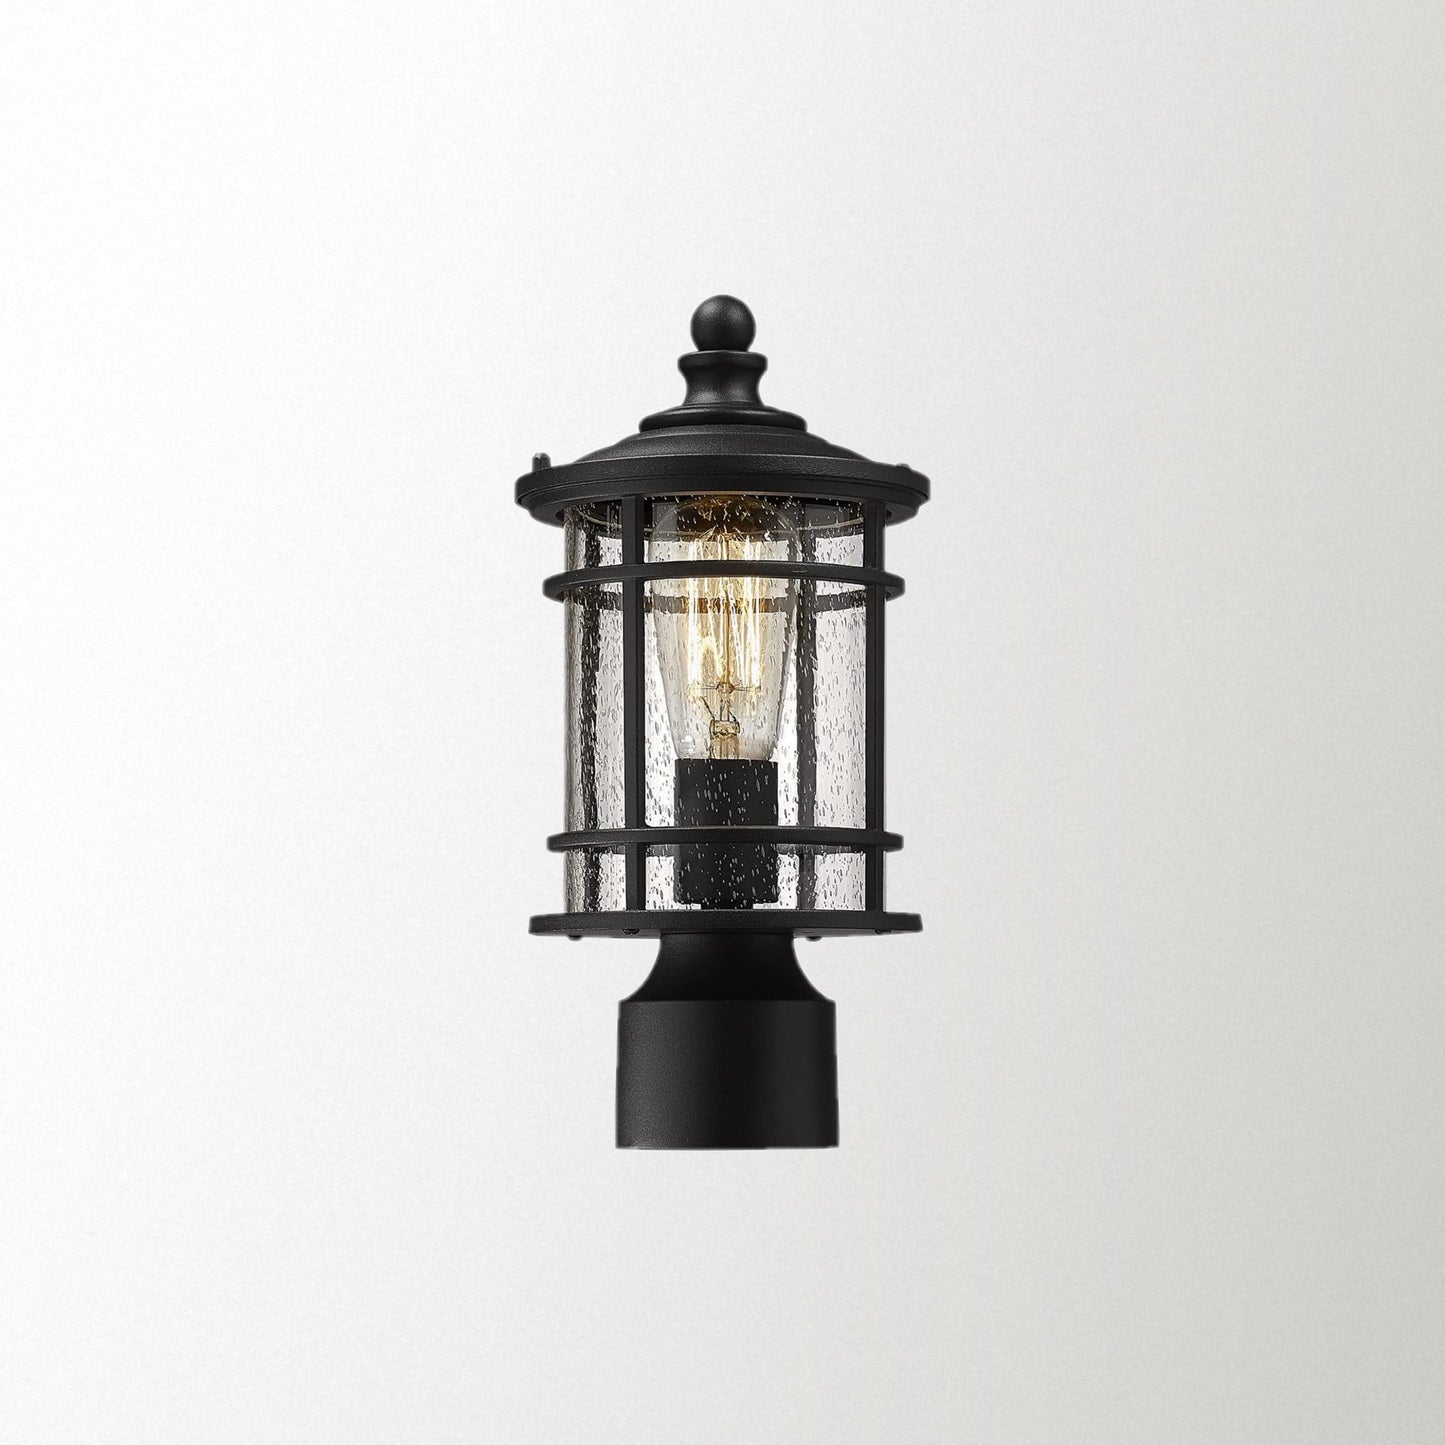 
                  
                    Emliviar Lamp Post Light Fixture - Modern Outdoor Post Light with Seeded Glass 12.5 Inch, Black Finish,XE229P-S BK
                  
                